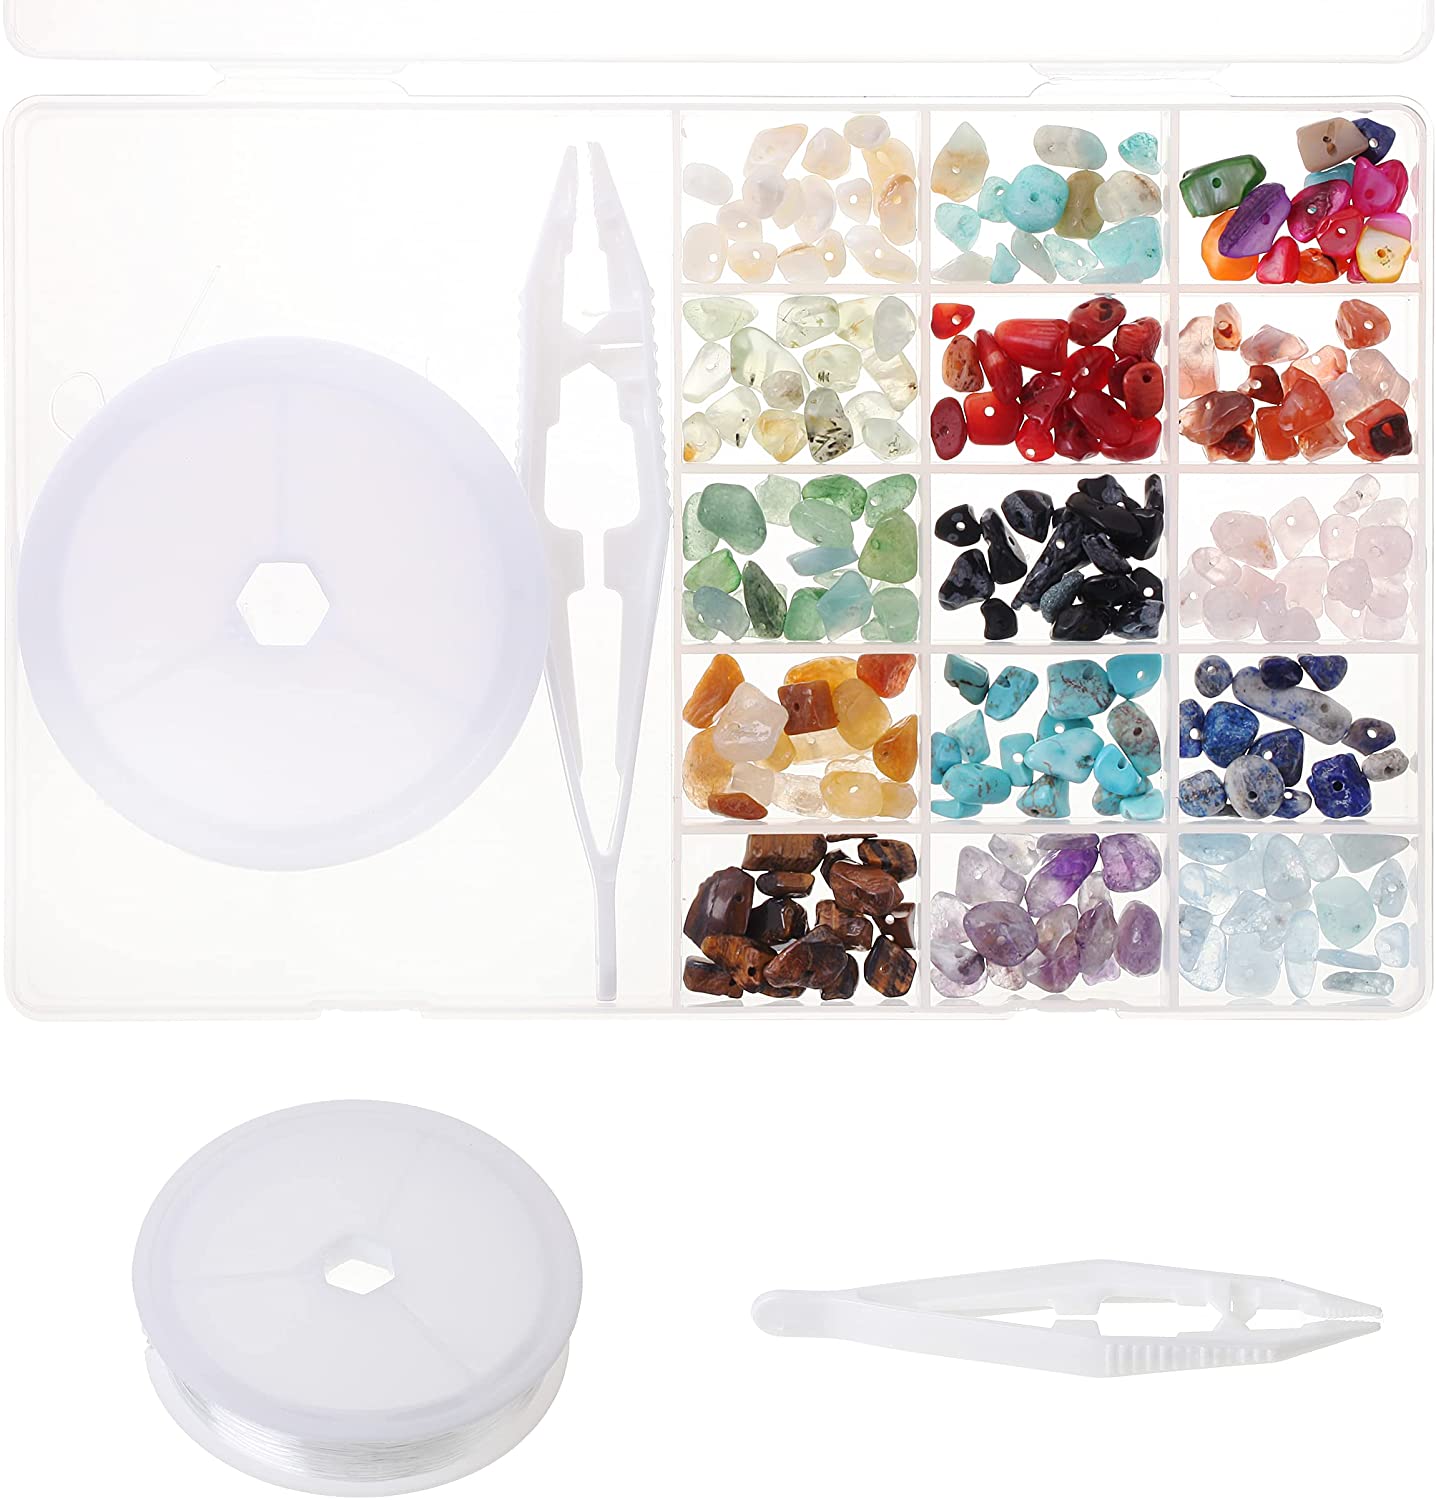 Mr. Pen- Irregular Gemstone Beads, 240 Pcs, 15 Styles Stone Beads, Stones for Jewelry Making